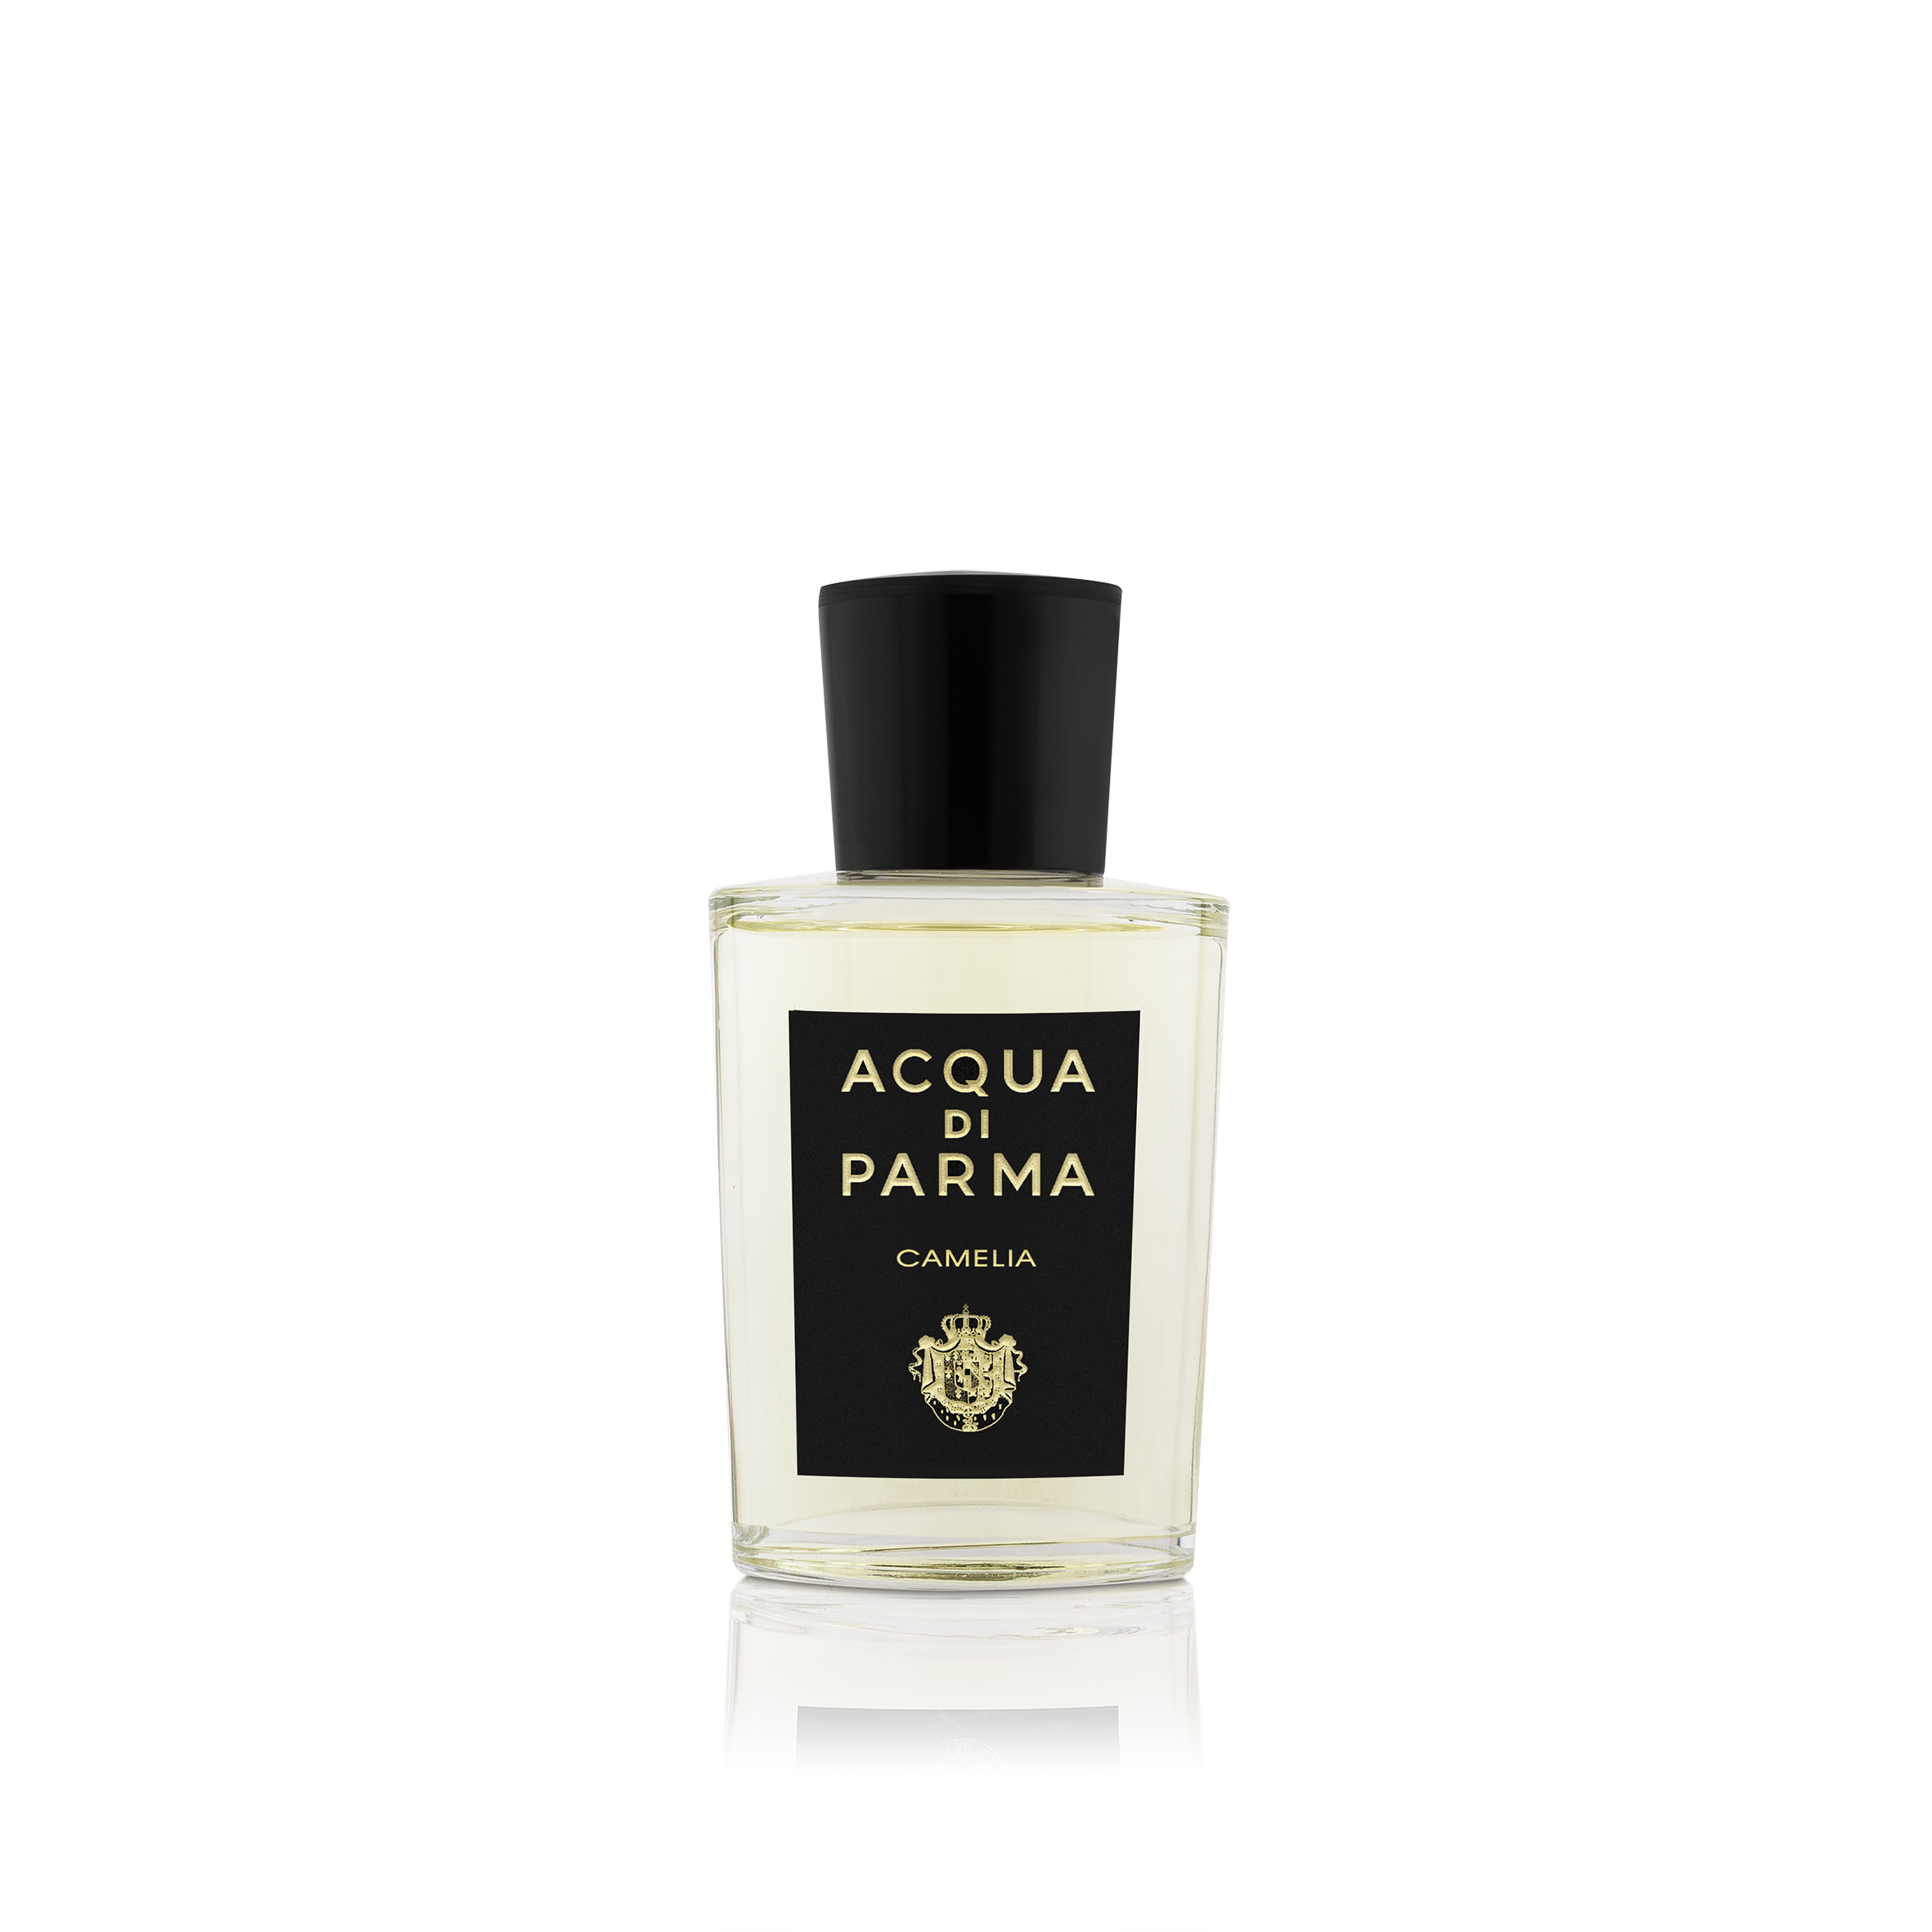 acqua di parma帕尔玛之水格调系列香氛 珍藏版限量上市 珍藏艺术香氛